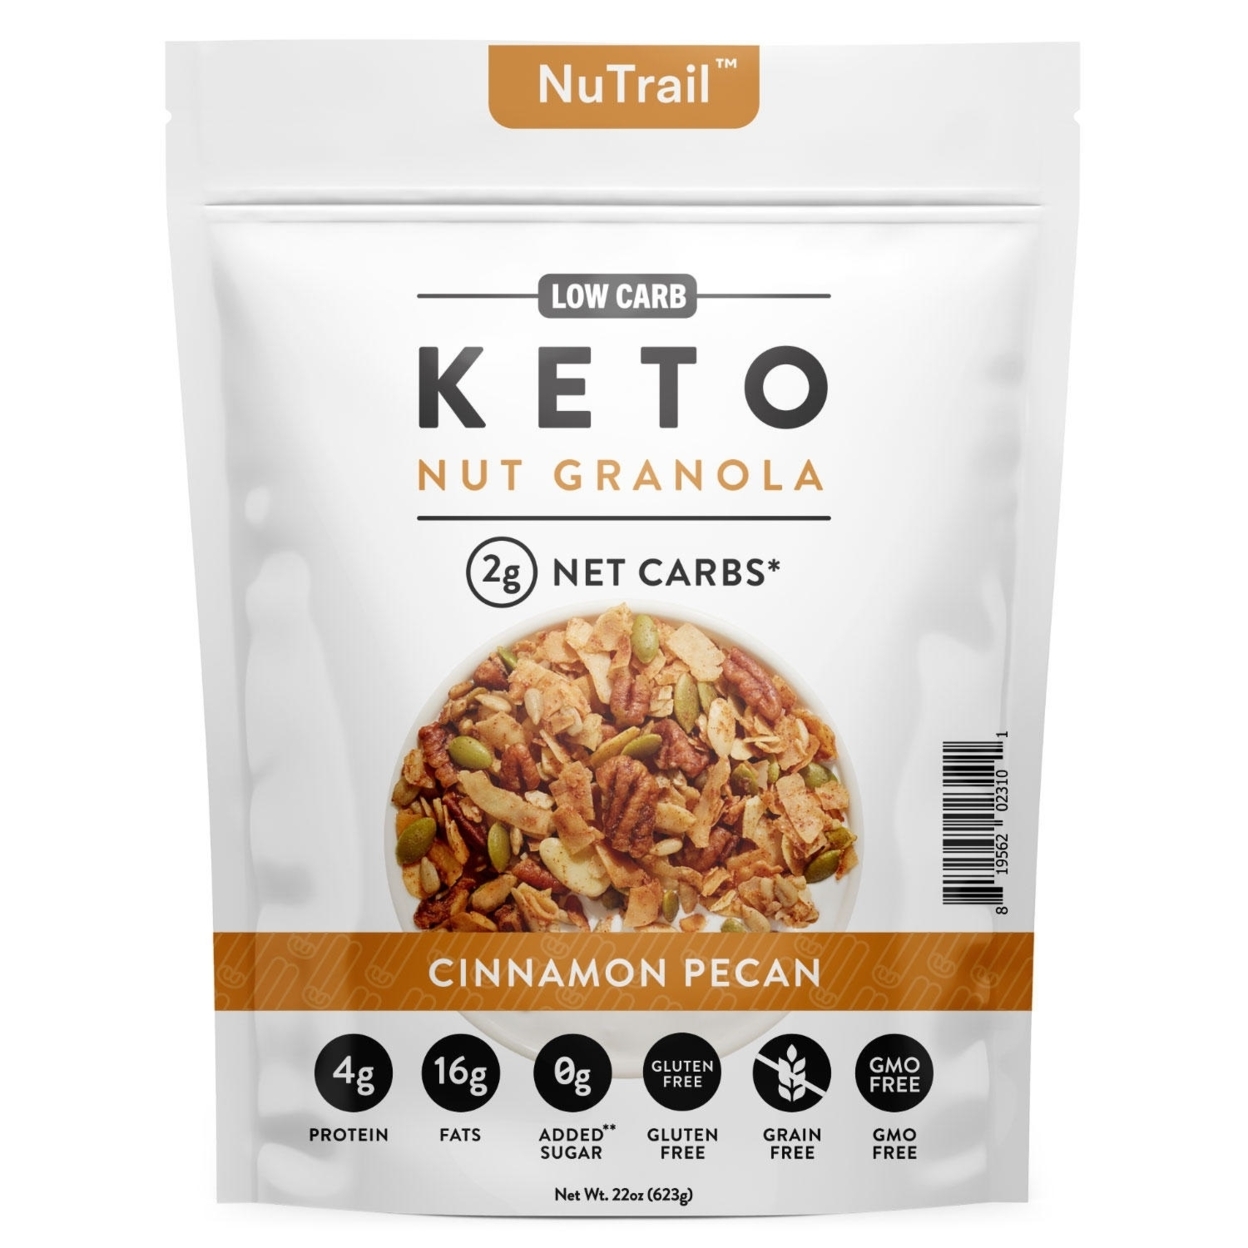 NuTrail Low Carb Keto Nut Granola, Cinnamon Pecan (22 Ounce)